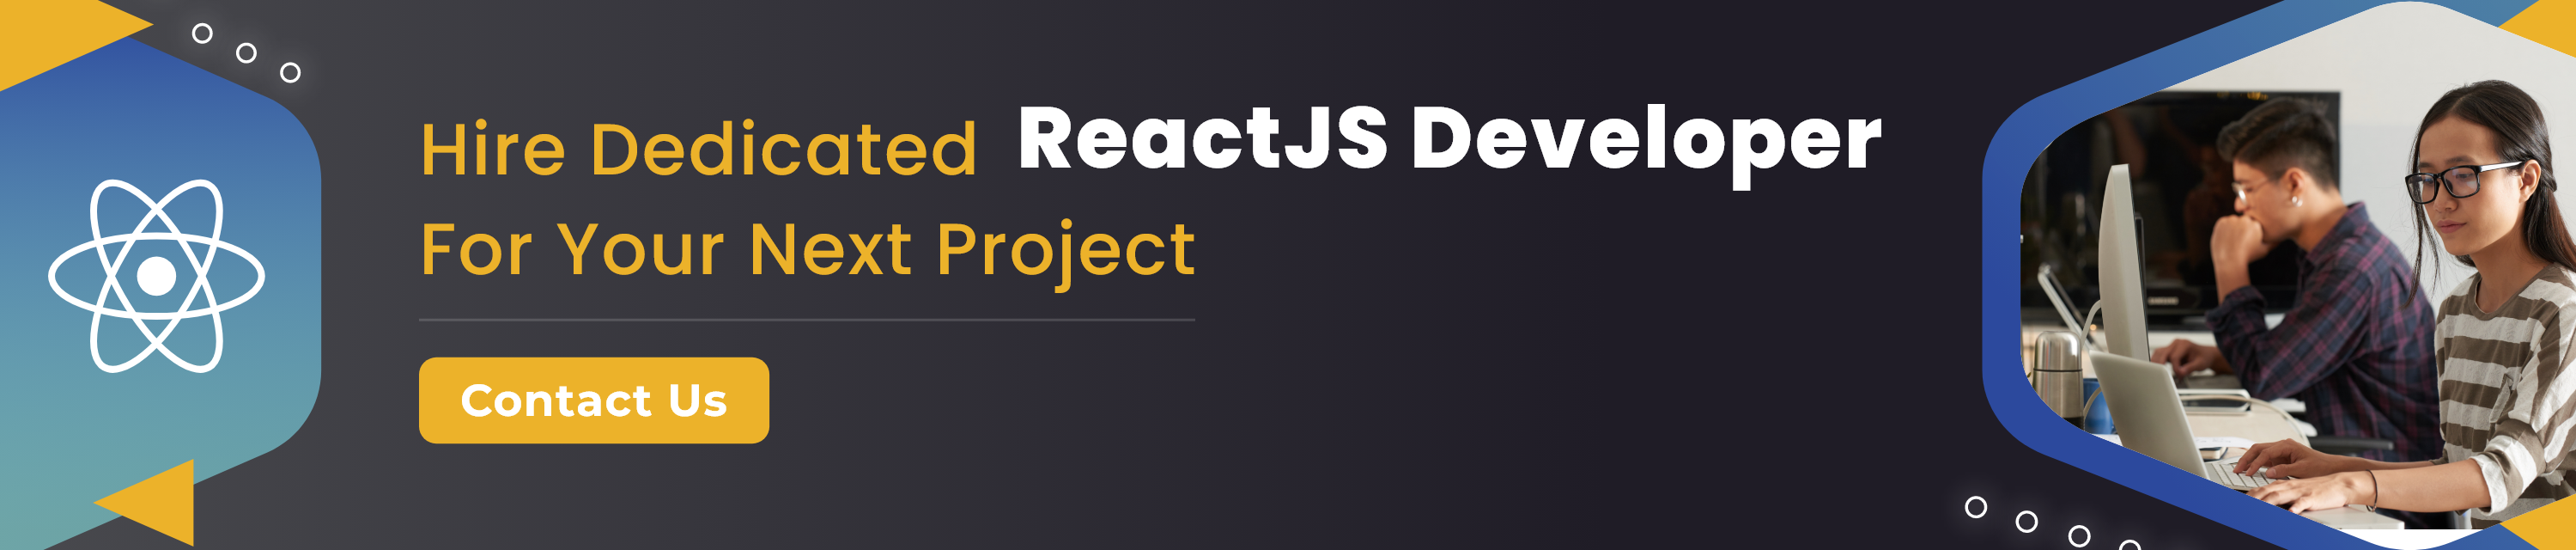 Contratar desarrolladores de ReactJS